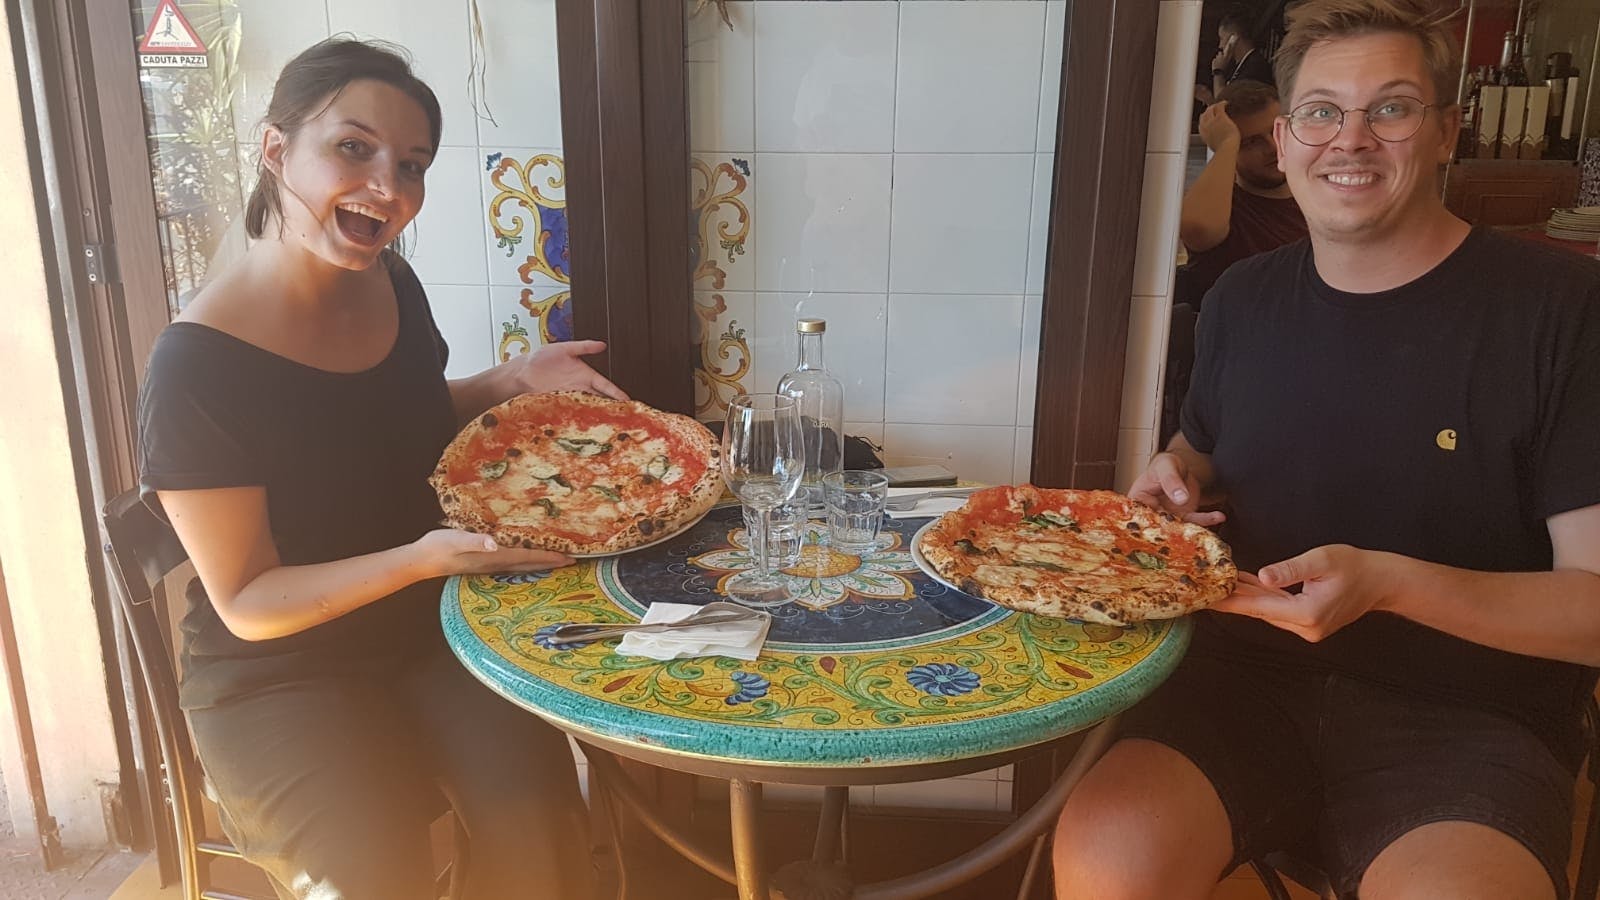 Oficina de pizza em Nápoles